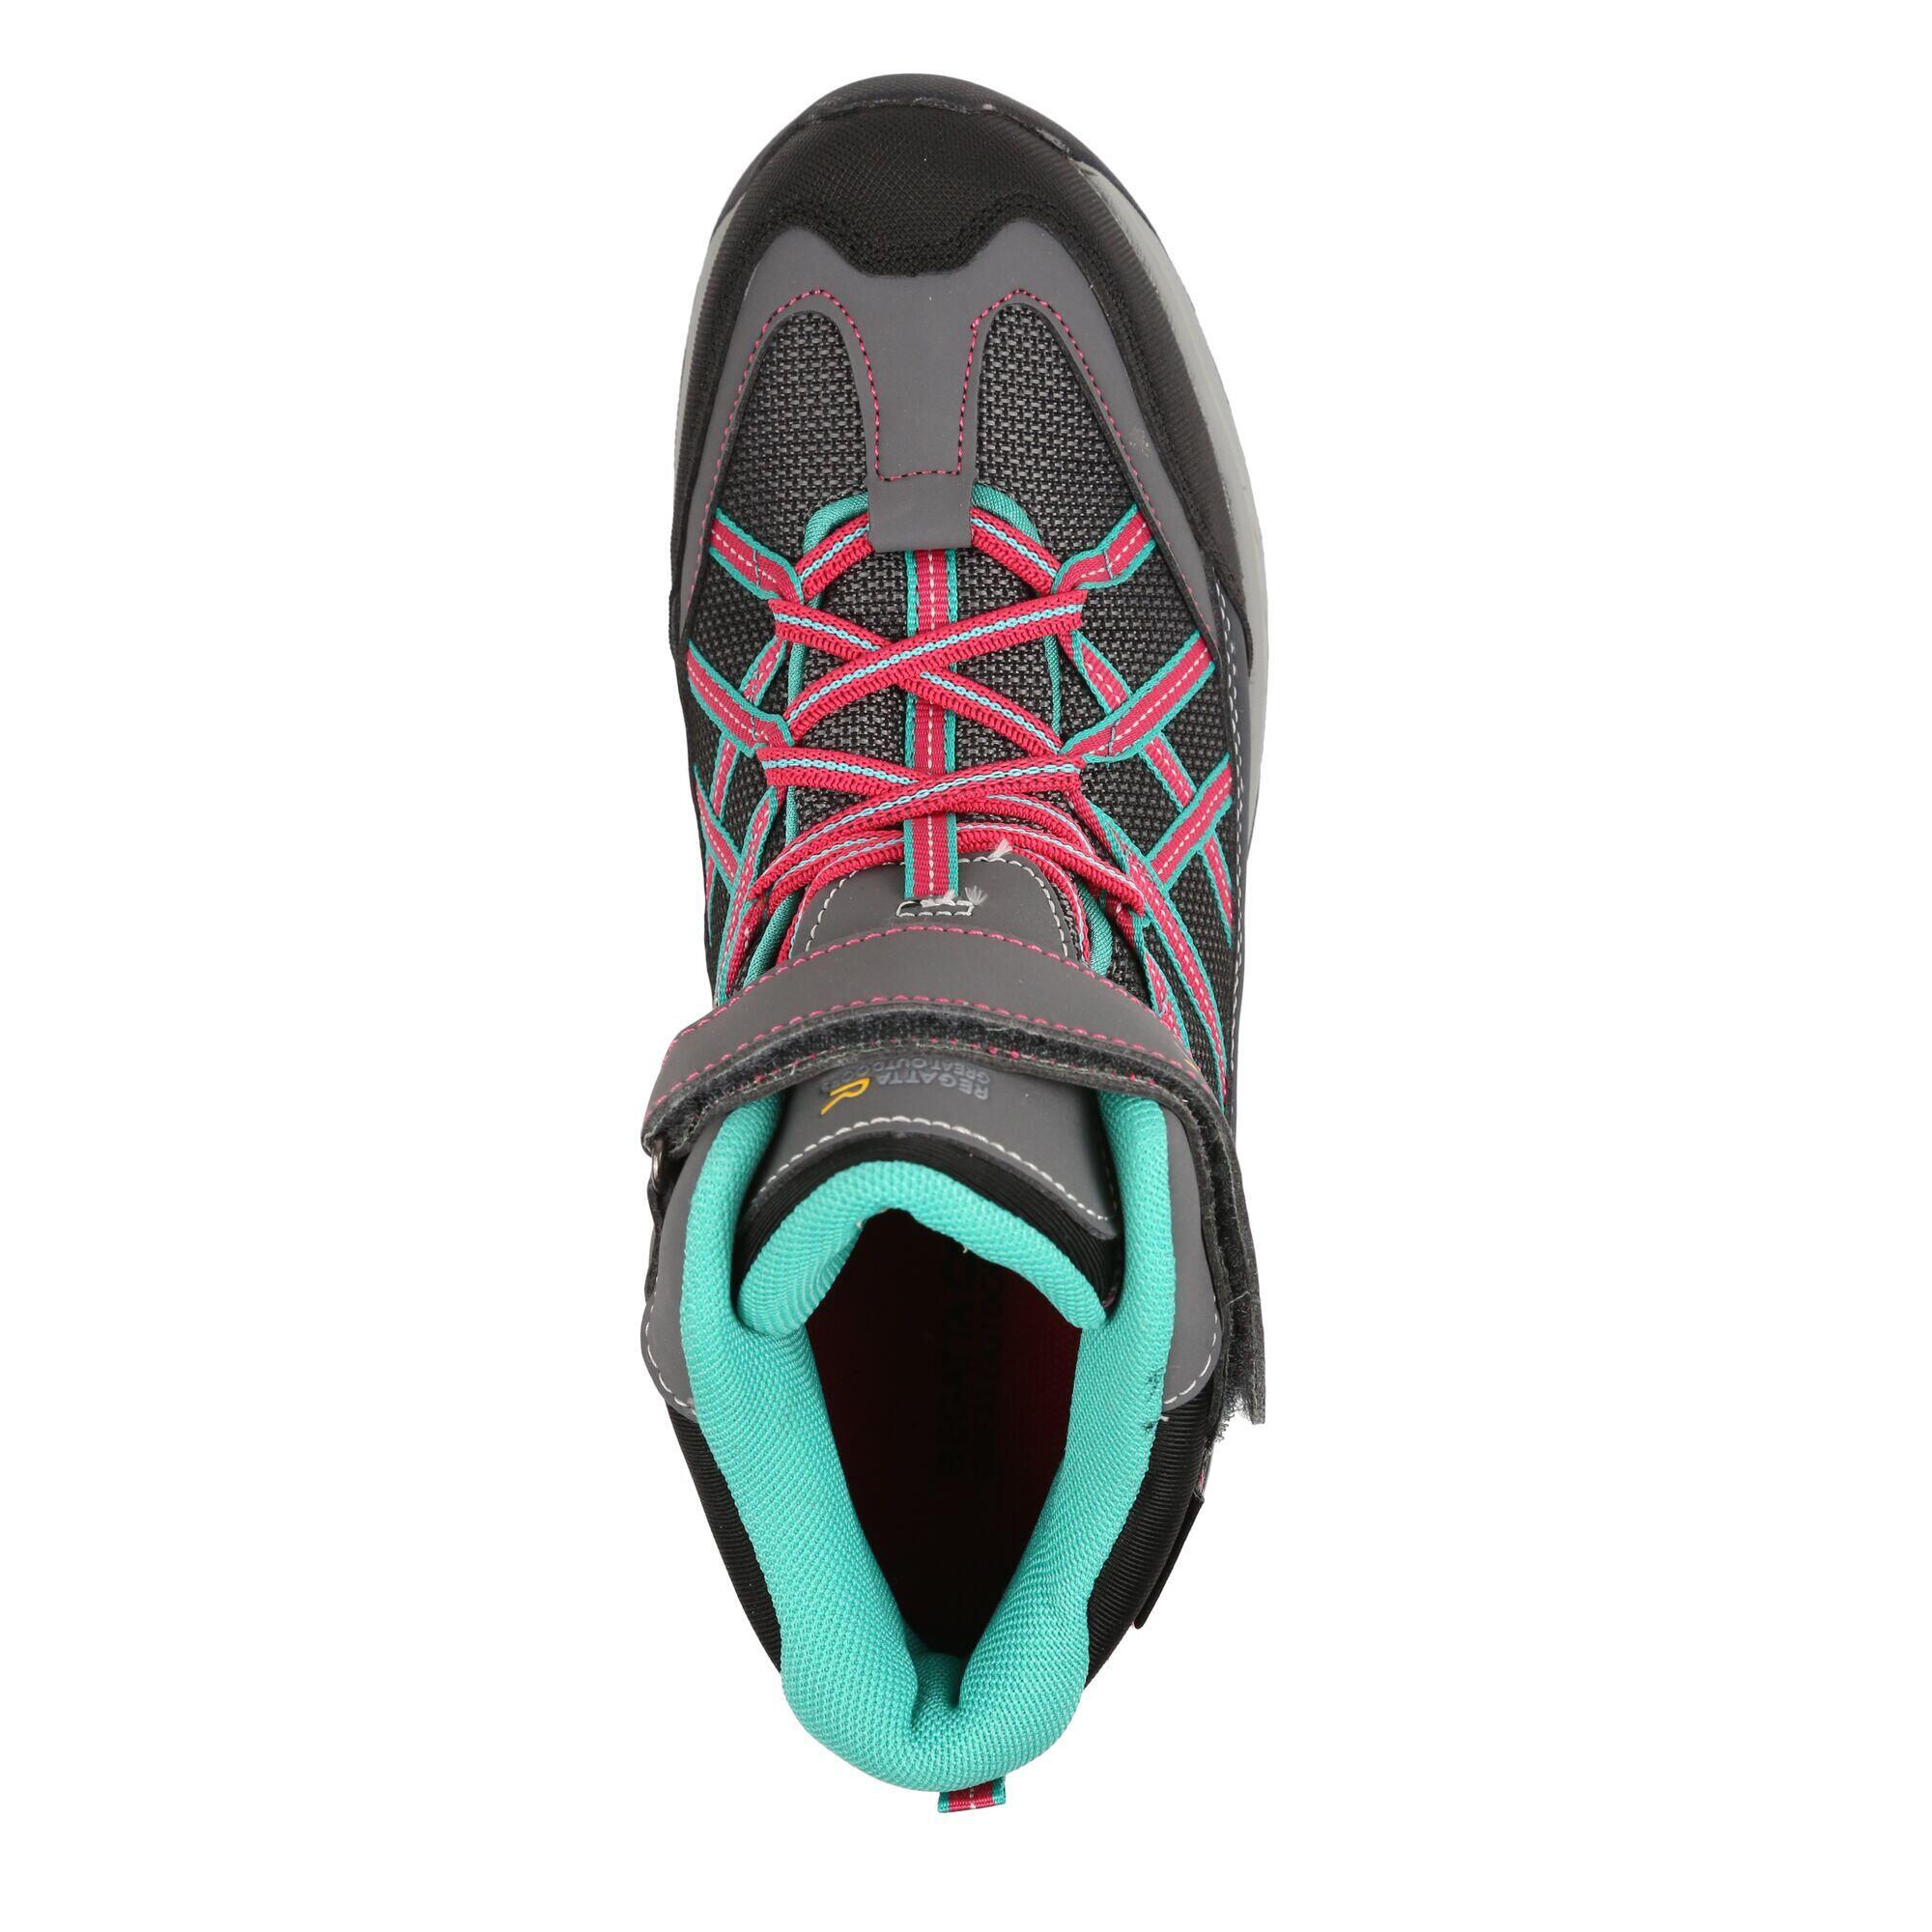 Samaris V Kids' Hiking Waterproof Mid Boots - Light Grey/Pink 6/6